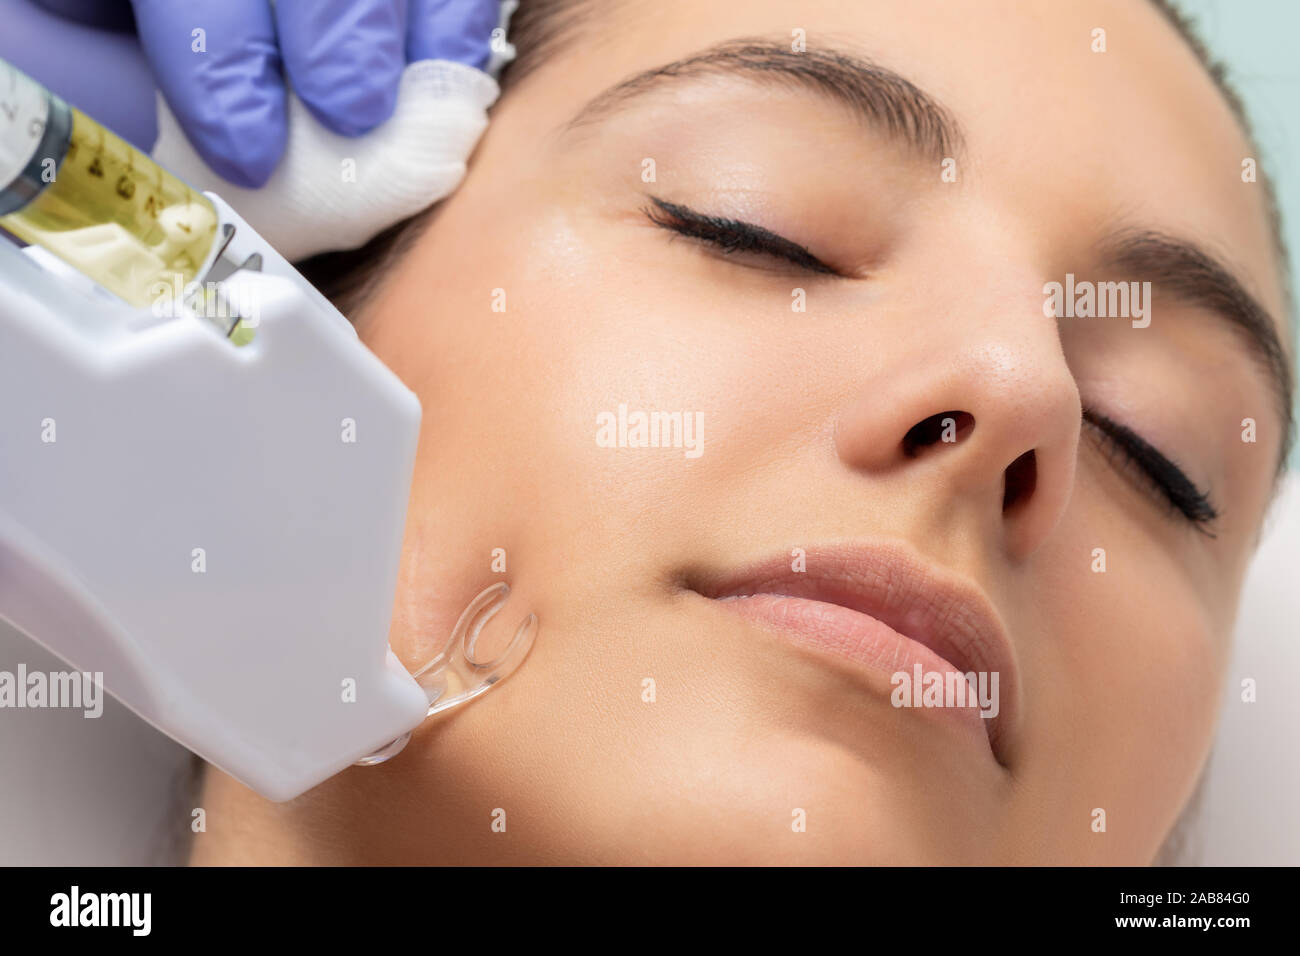 Therapist doing micro needling non invasive surgery on woman's cheek to remove scars. Stock Photo